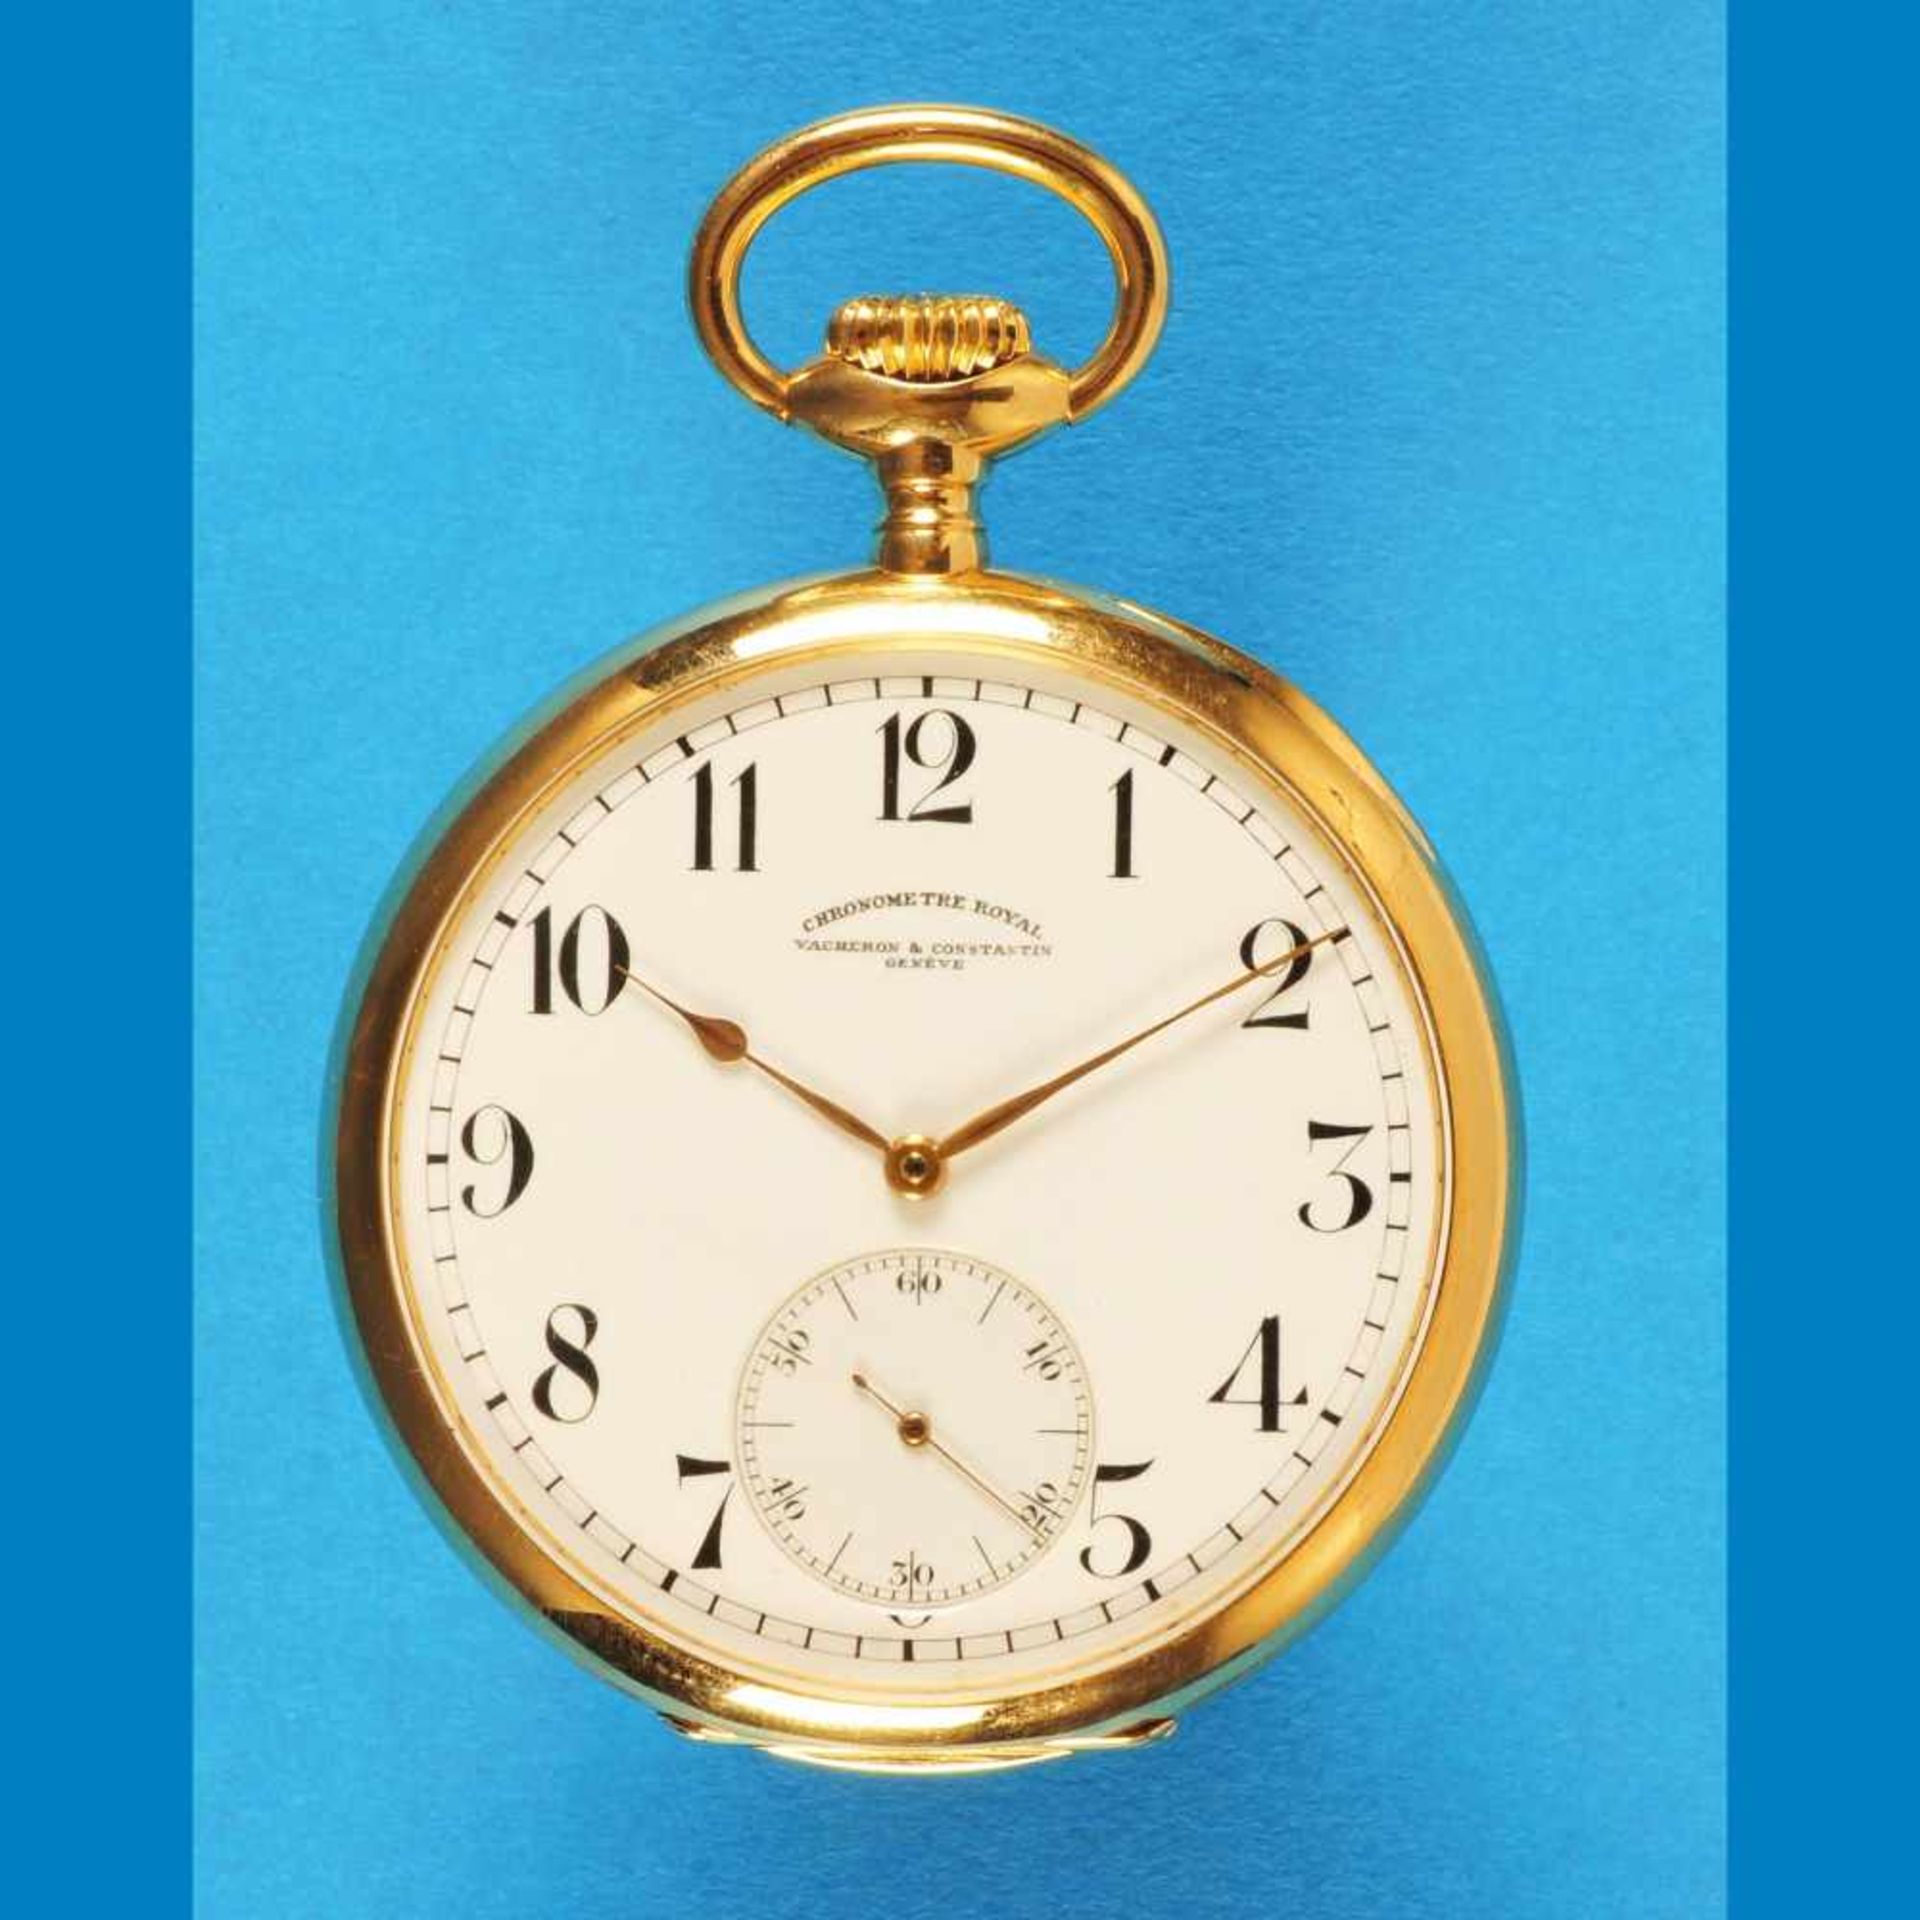 Vacheron & Constantin Genève „Chronometre Royal”, big golden pocket watch